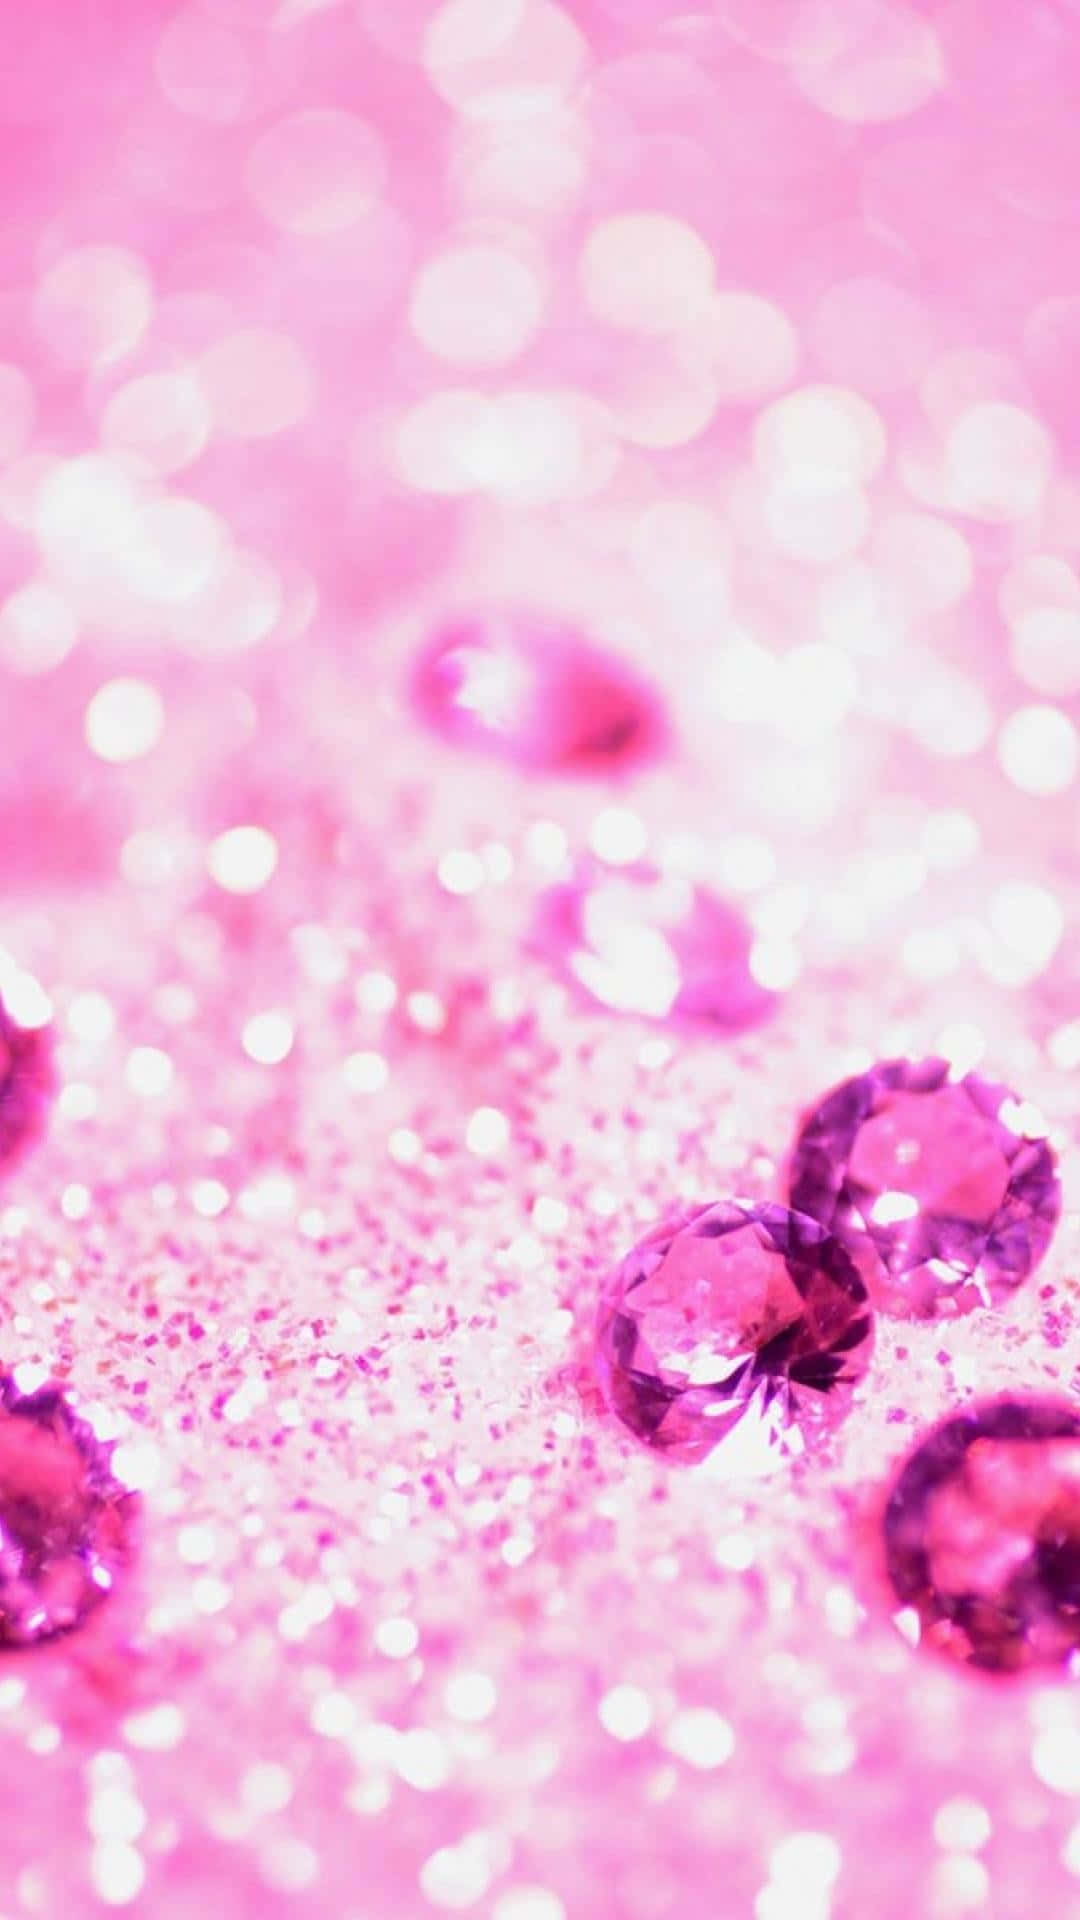 Vibrant hot pink background